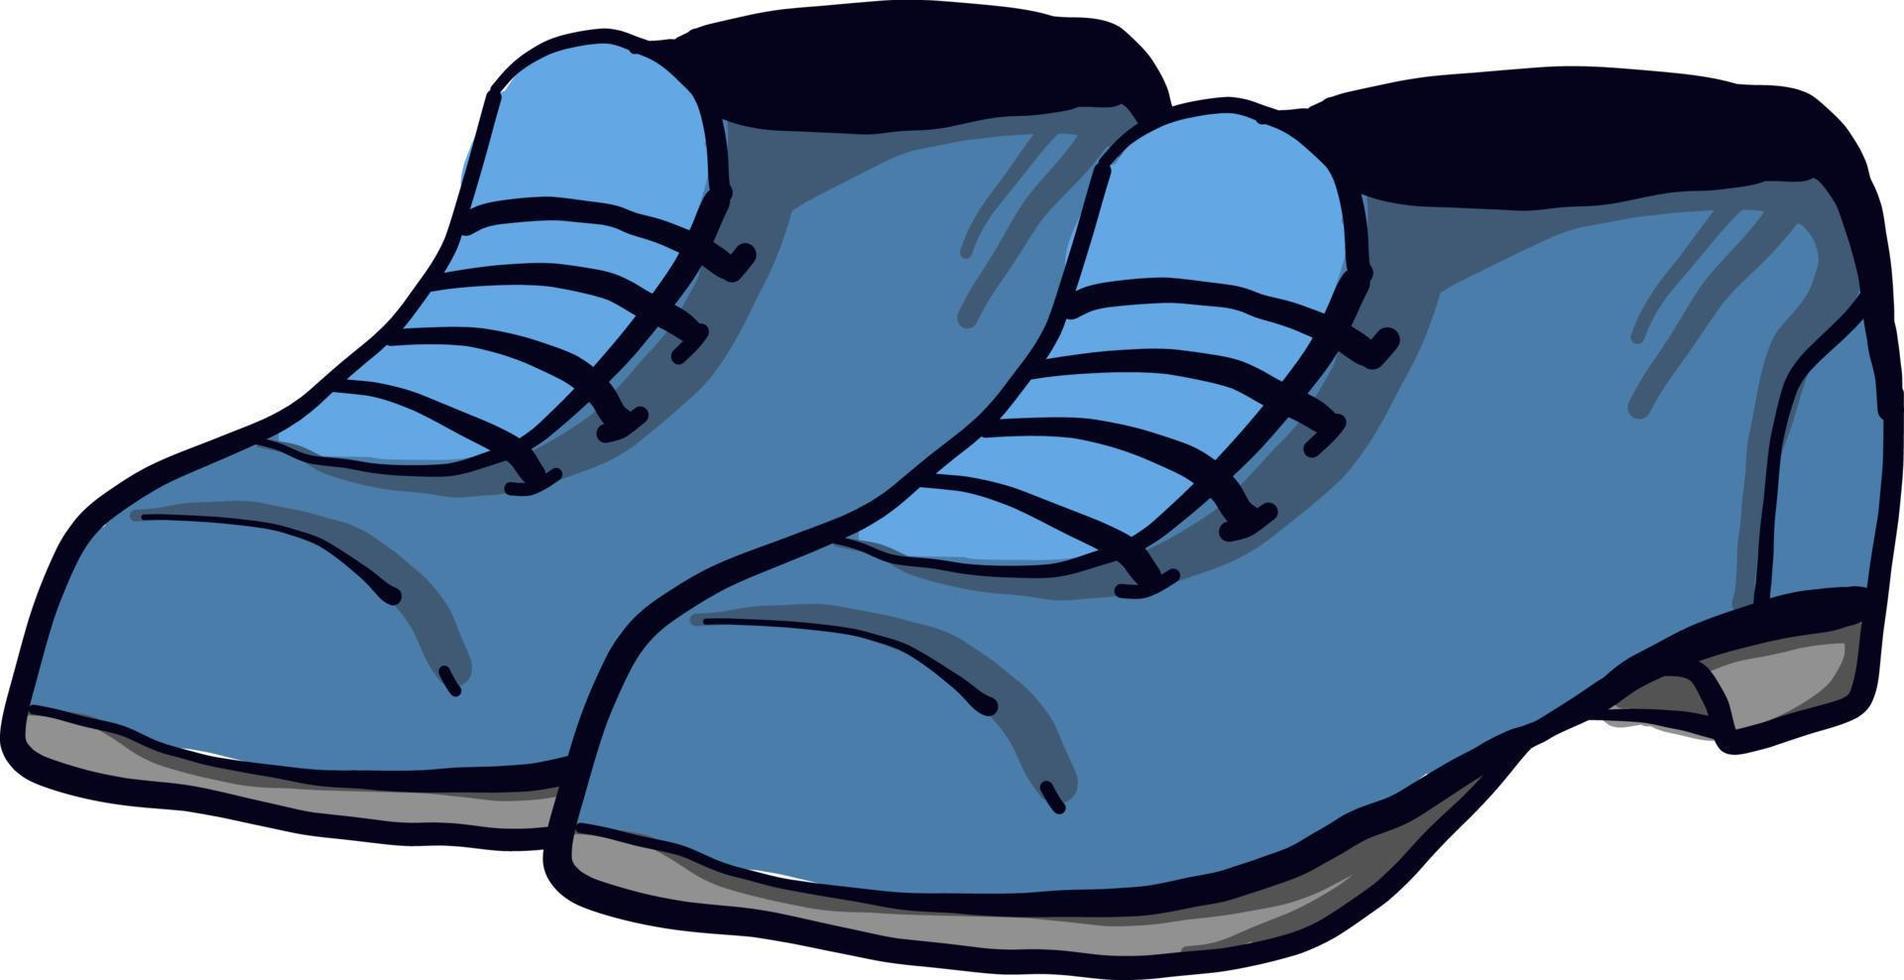 Zapatos de hombre azul , ilustración, vector sobre fondo blanco